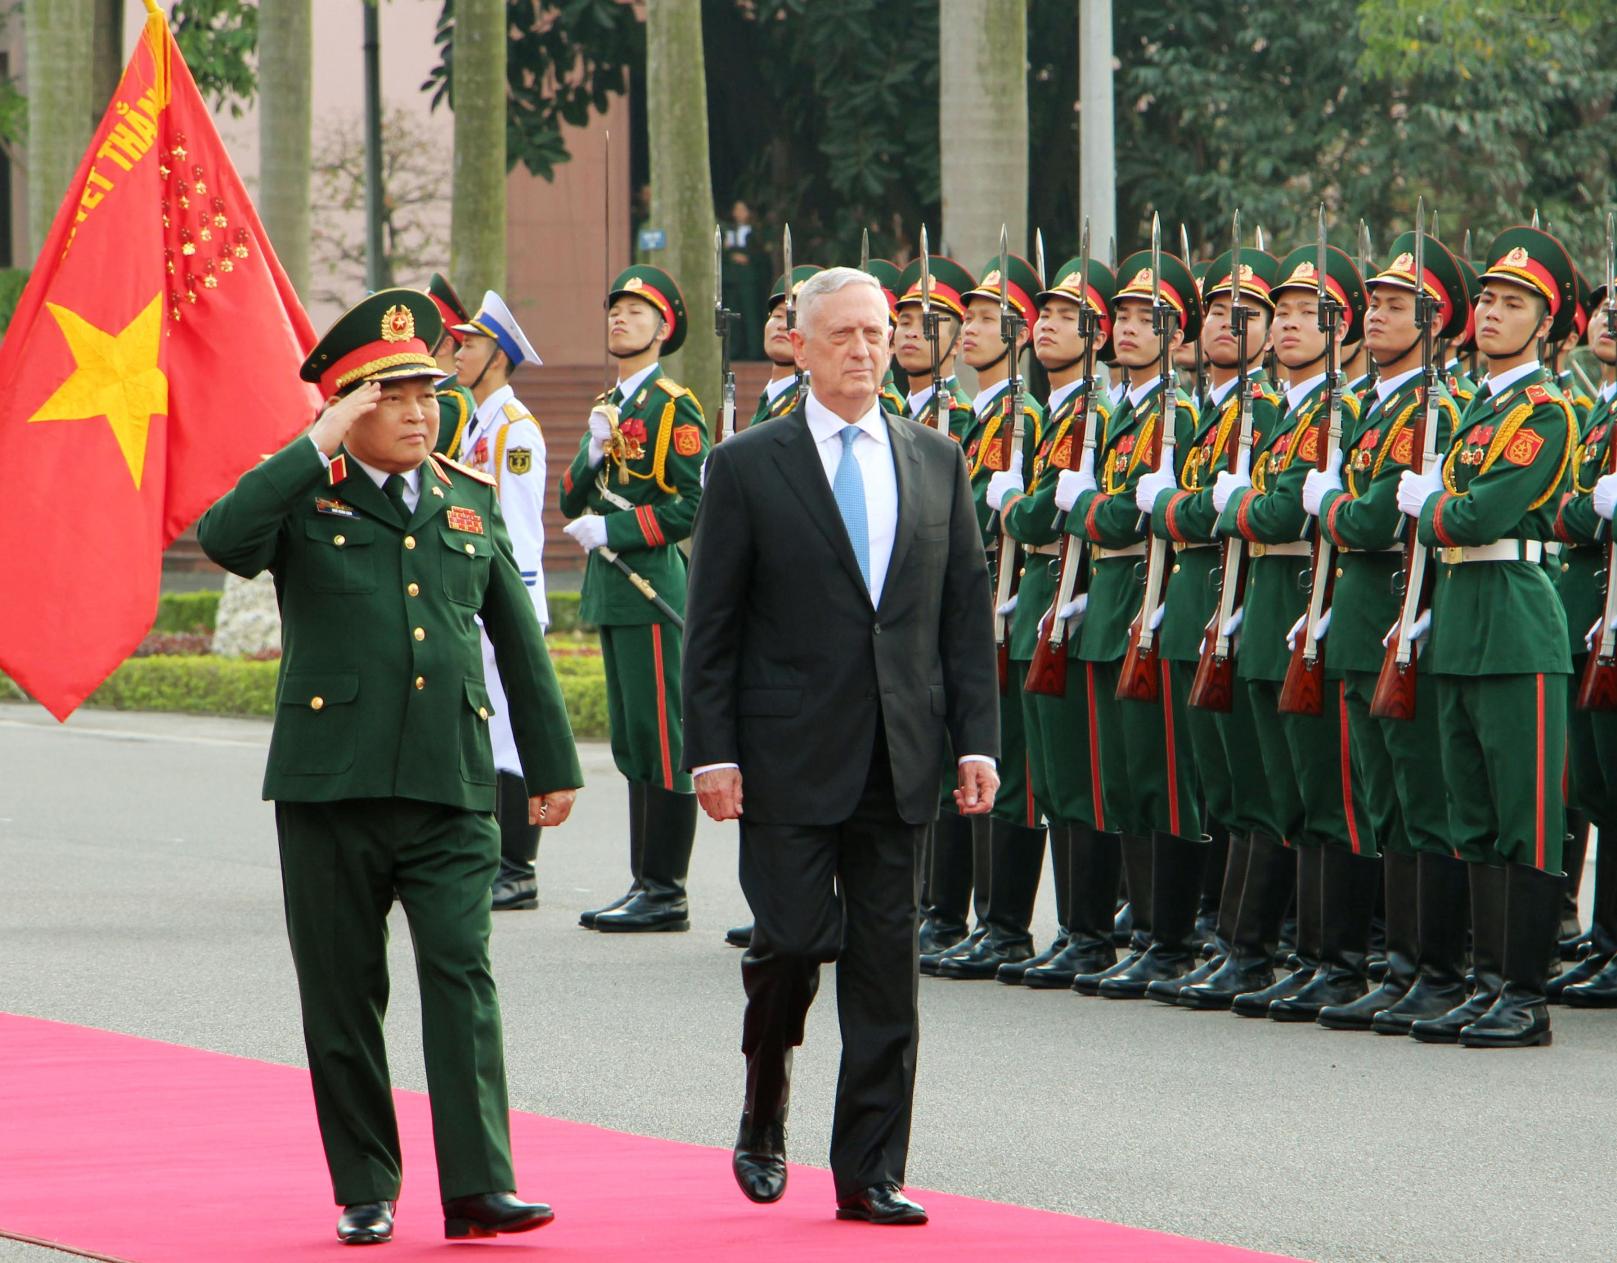 States Secretary of Defense Mattis in Vietnam